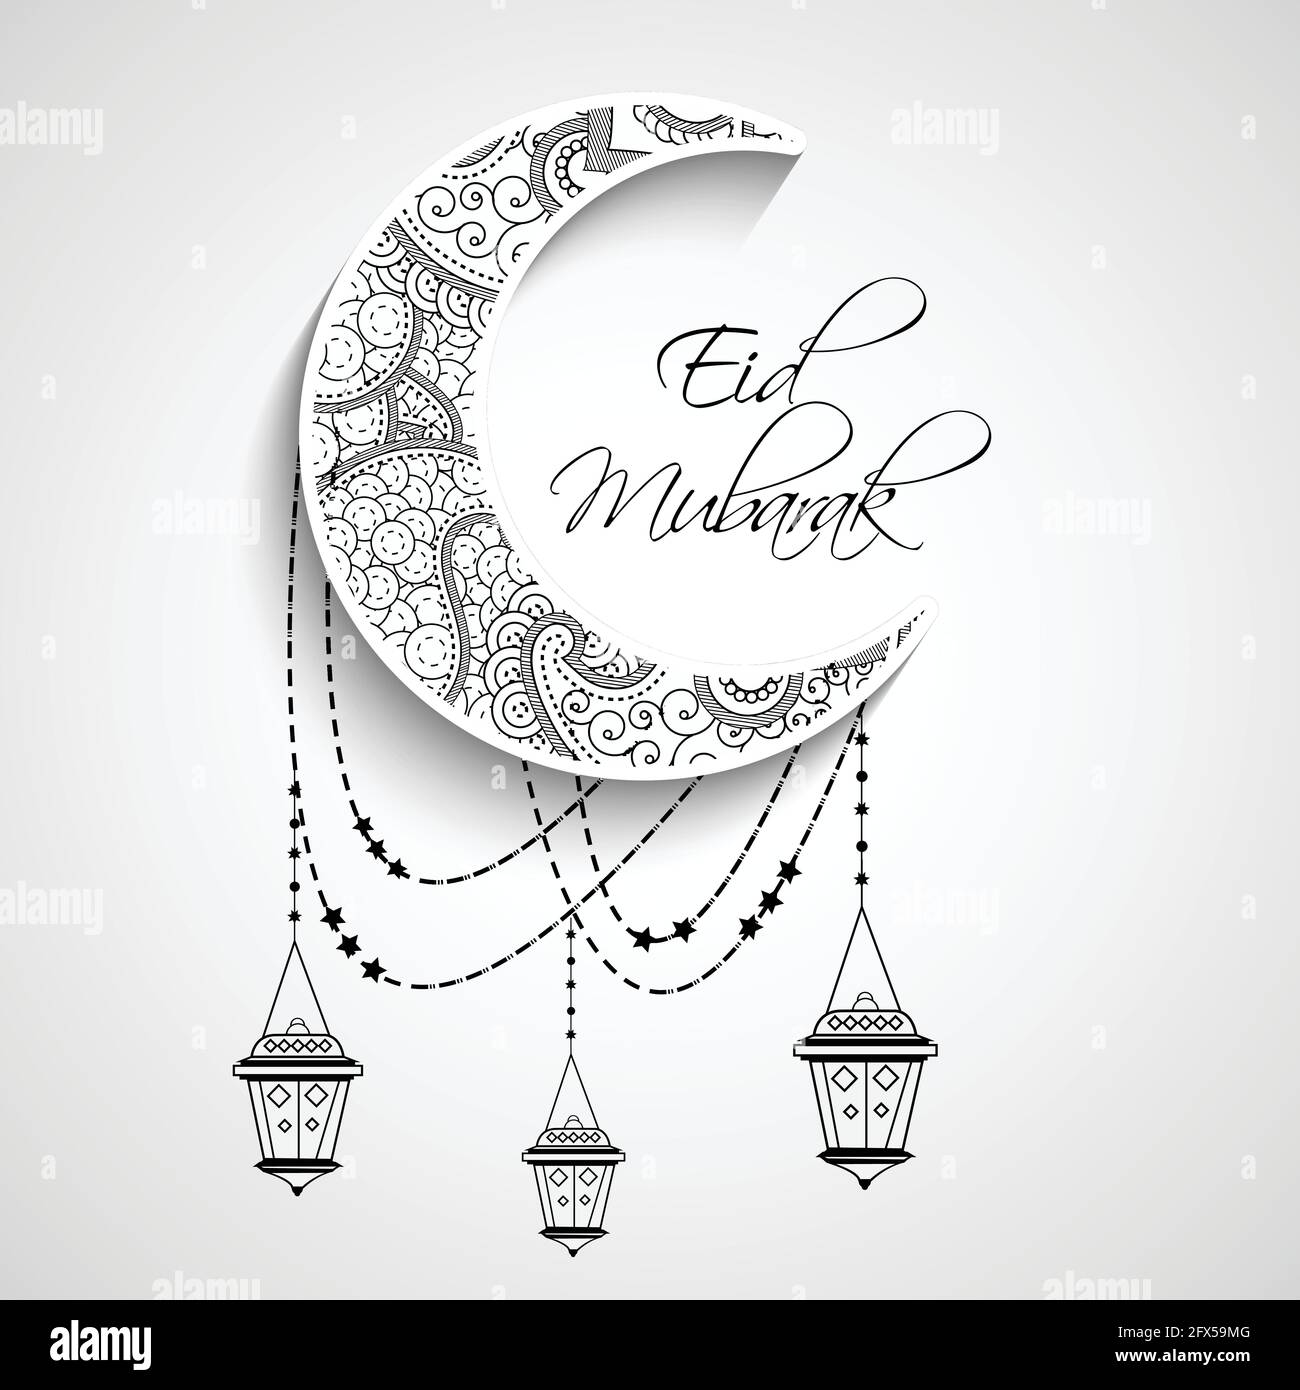 eid mubarak background 2FX59MG